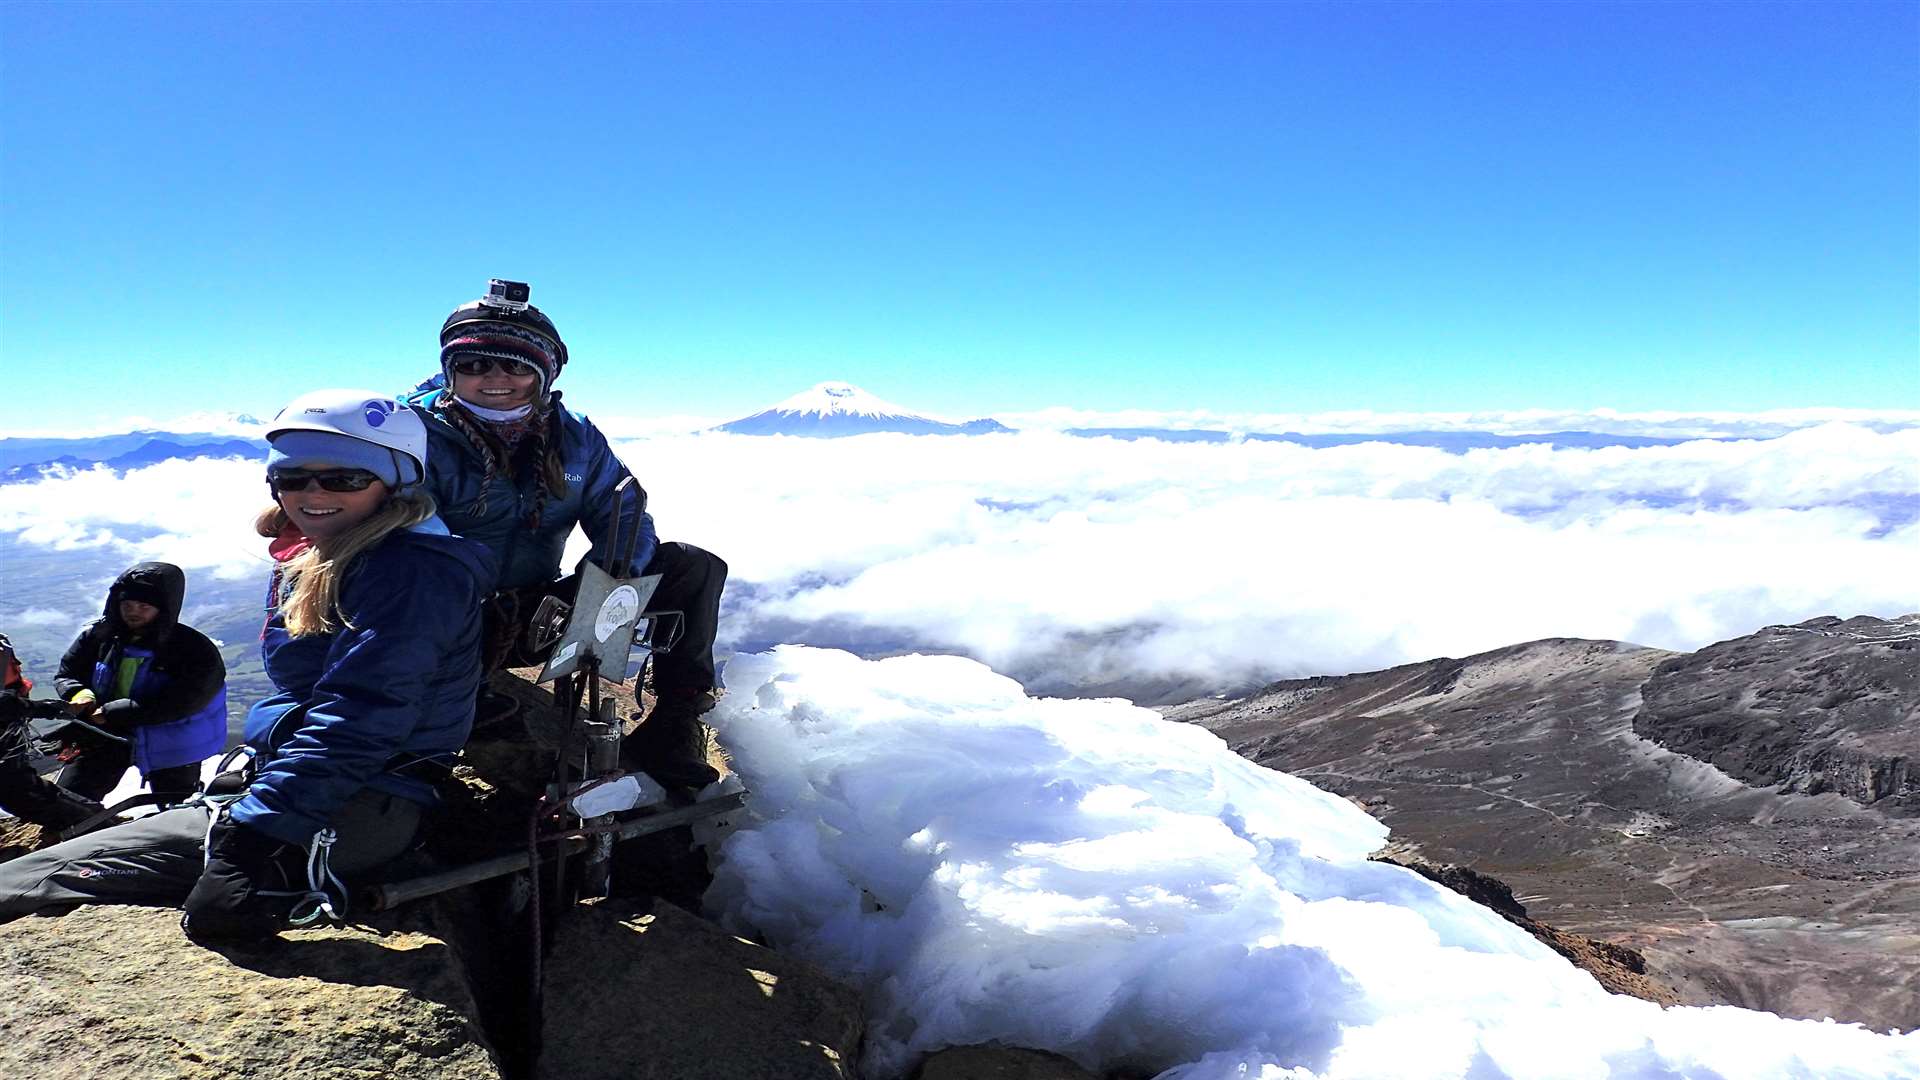 Amanda and a fellow transplant patient during their volcano climb in Ecuador